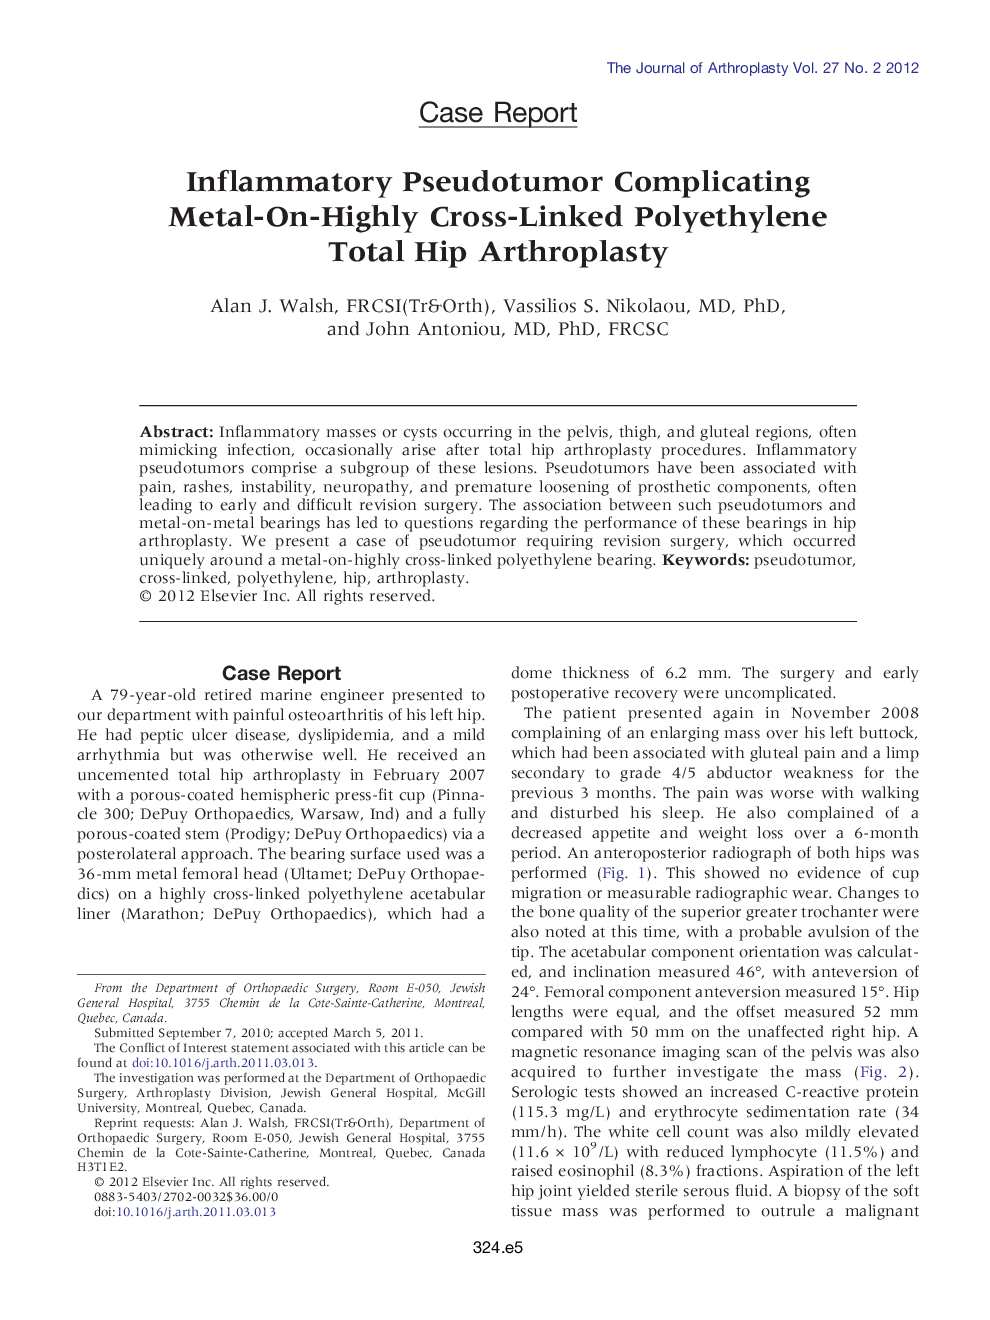 Inflammatory Pseudotumor Complicating Metal-On-Highly Cross-Linked Polyethylene Total Hip Arthroplasty